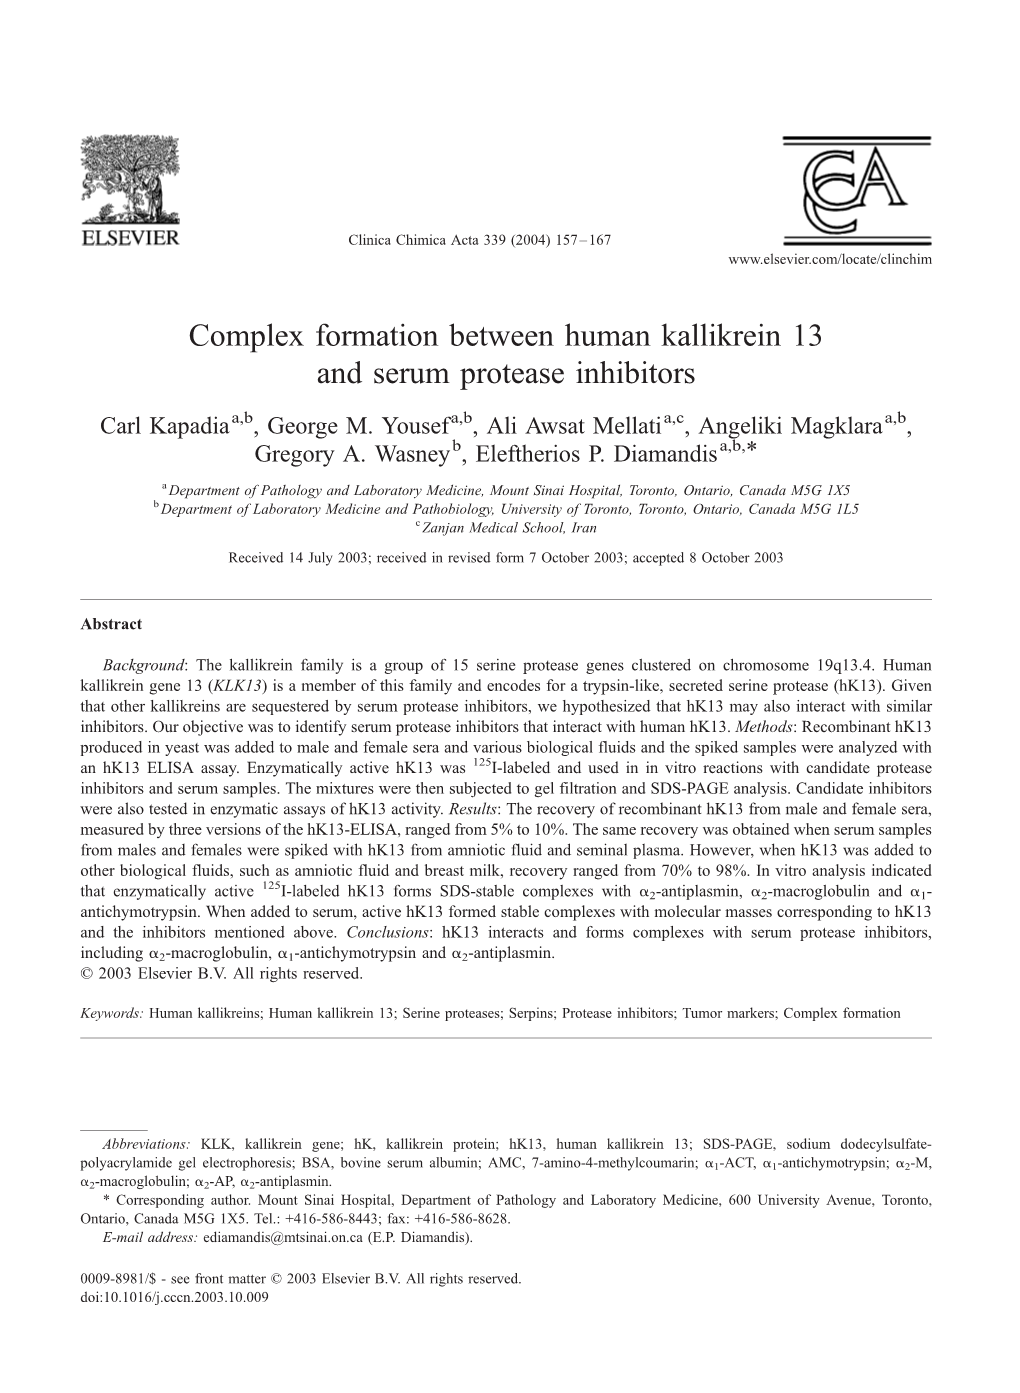 Complex Formation Between Human Kallikrein 13 and Serum Protease Inhibitors